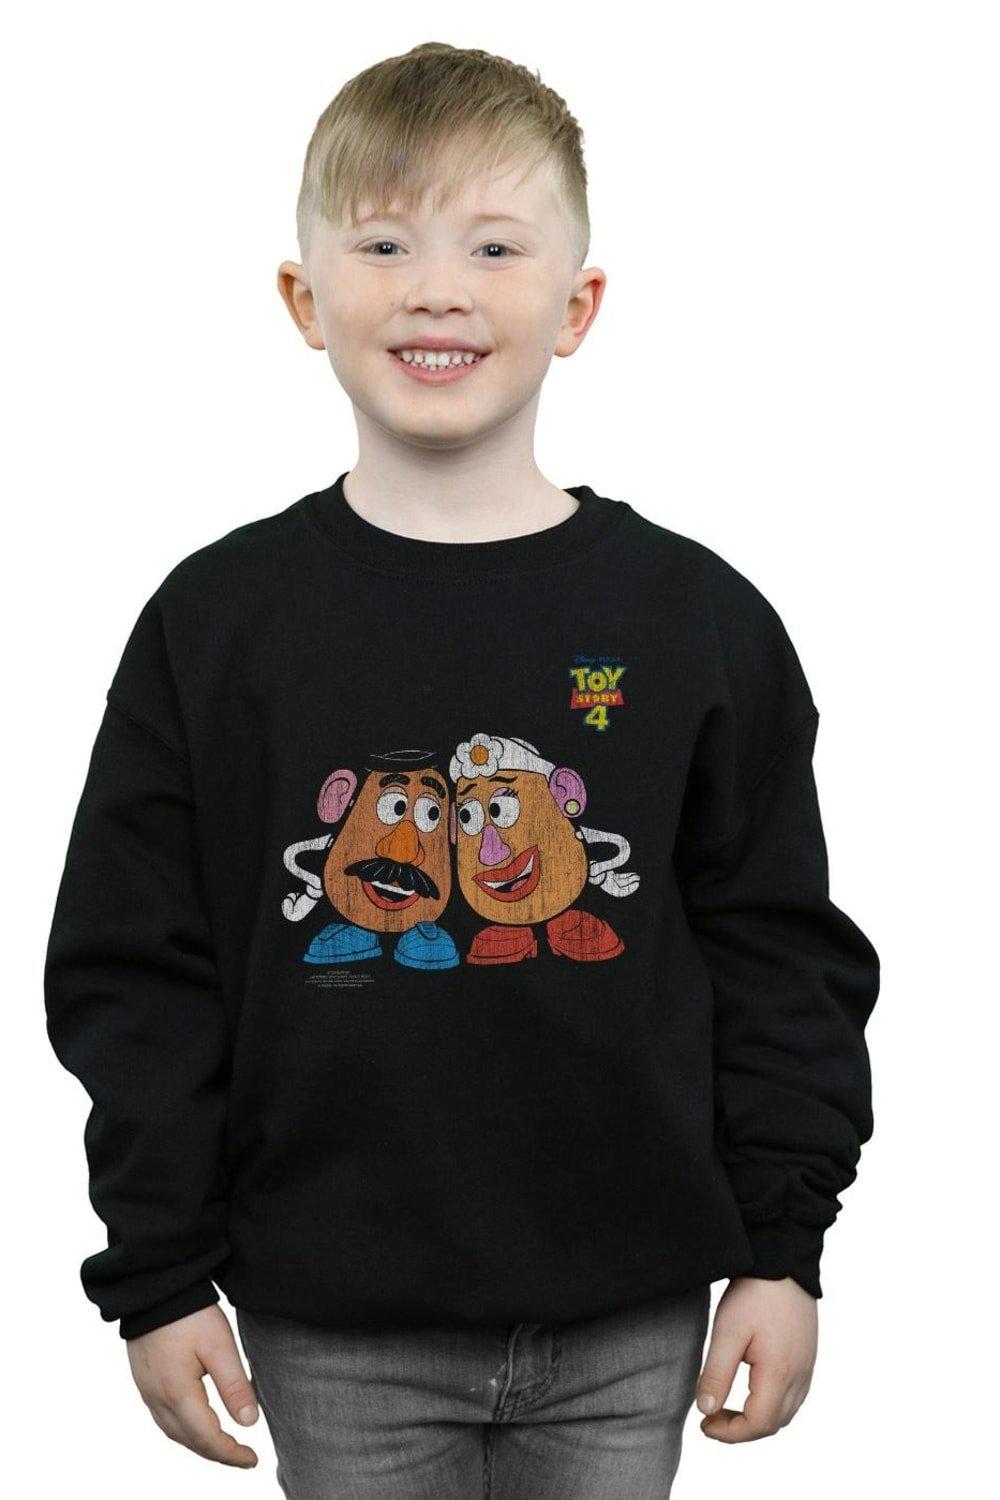 Toy Story 4 Mr And Mrs Potato Head Sweatshirt